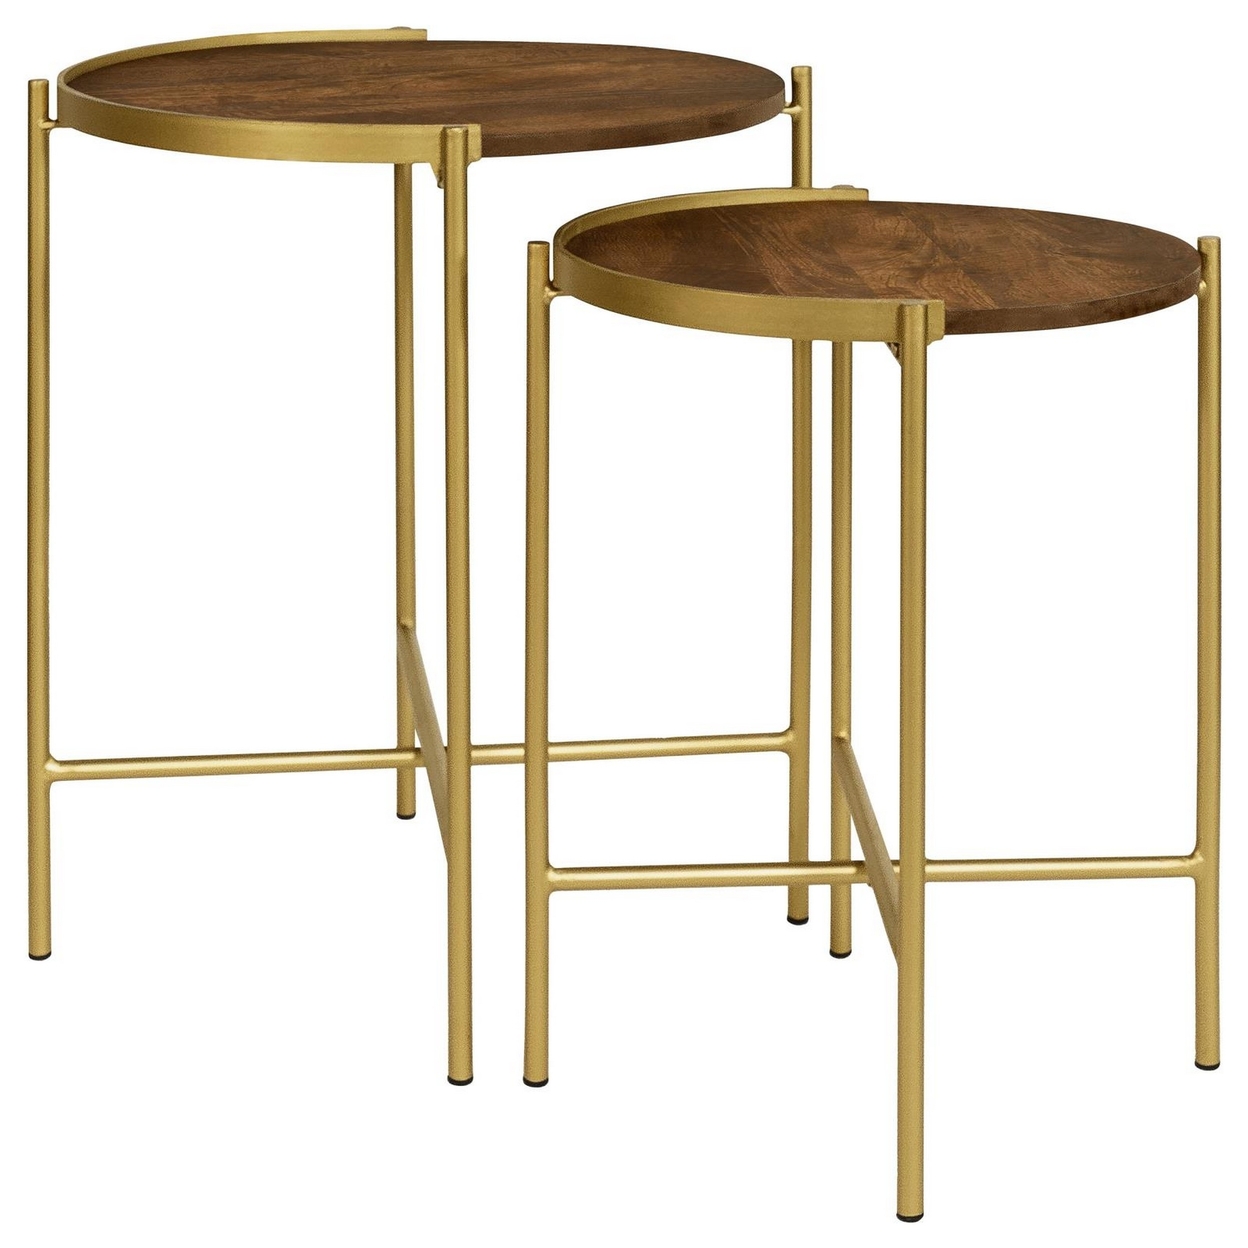 2 Piece Round Nesting Tables, Gold Iron, Modern Mango Wood, Warm Brown -Saltoro Sherpi